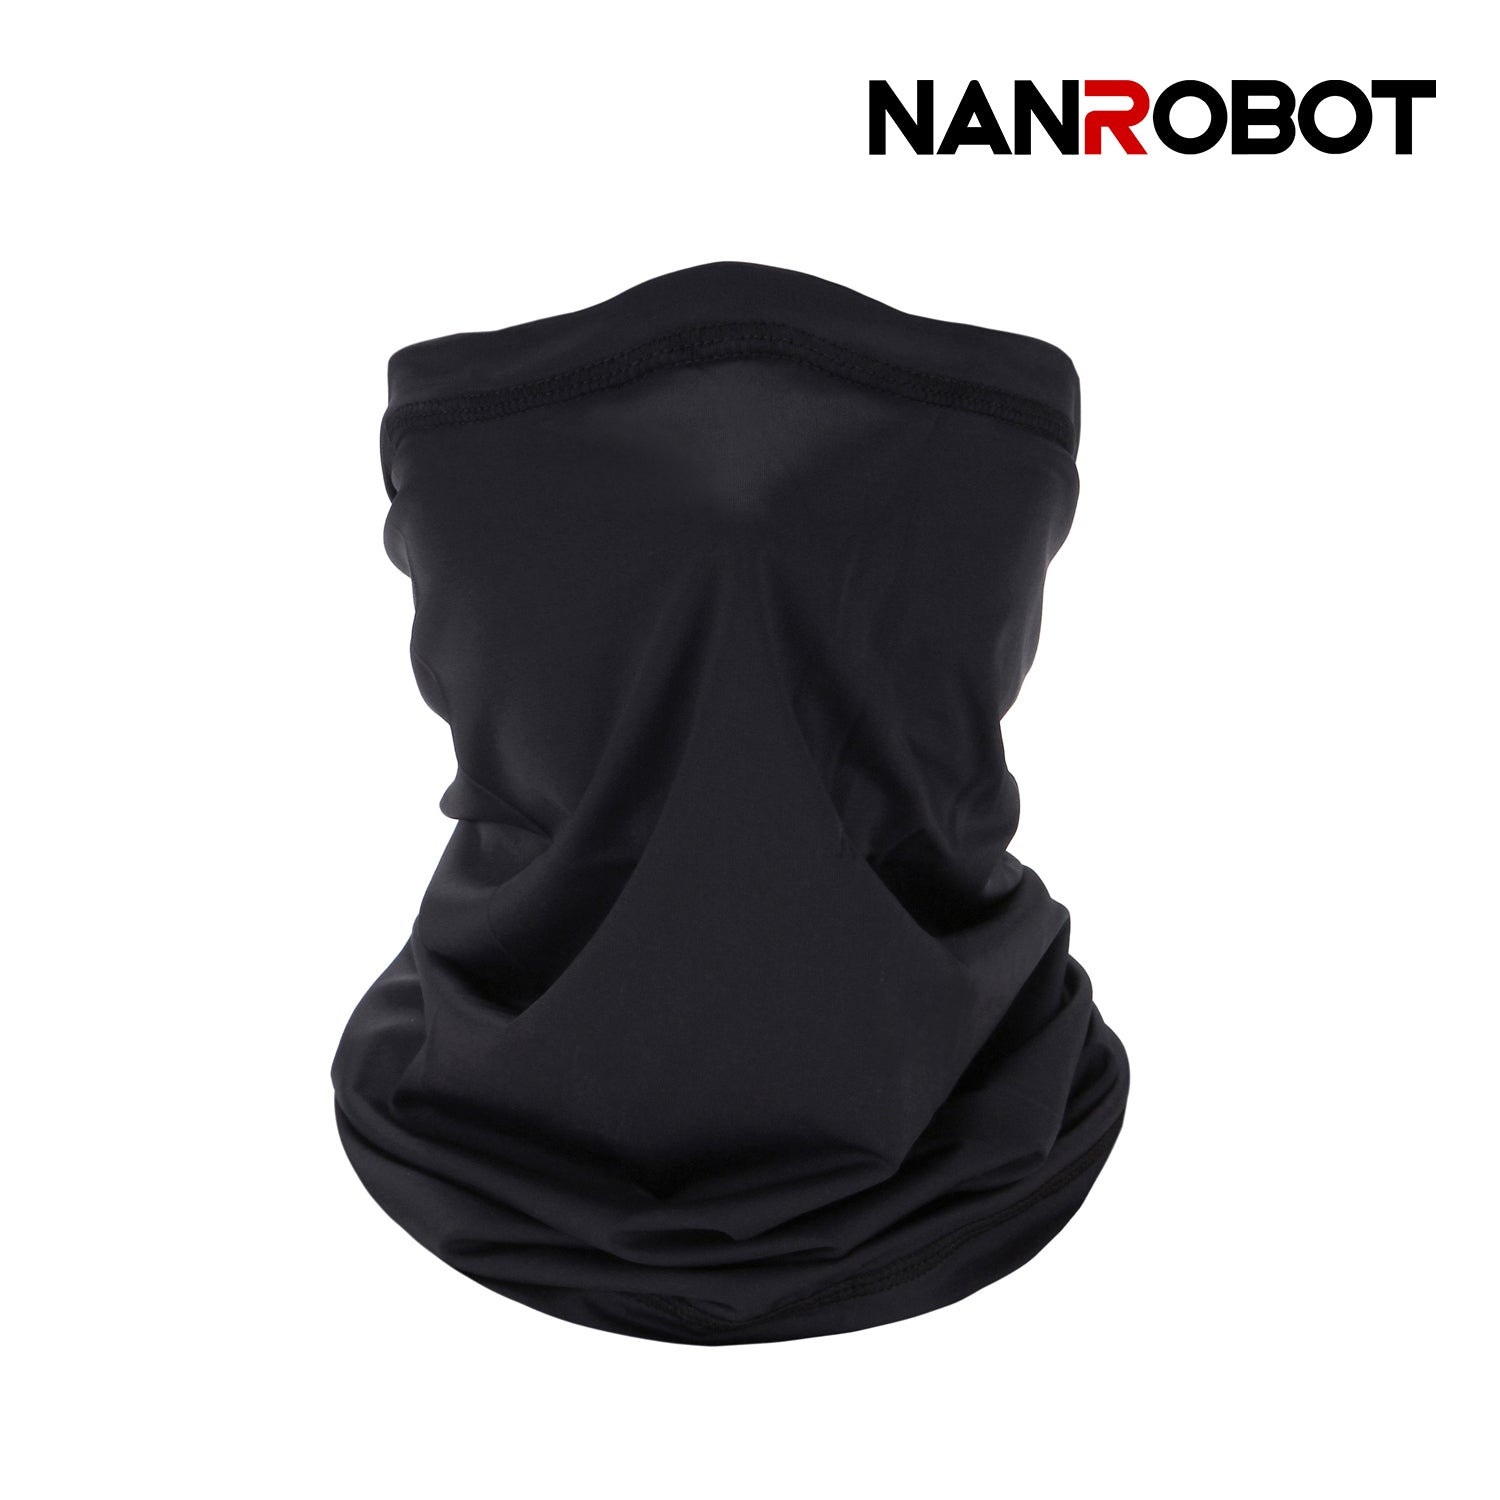 NANROBOT-Scooting mask - NANROBOT